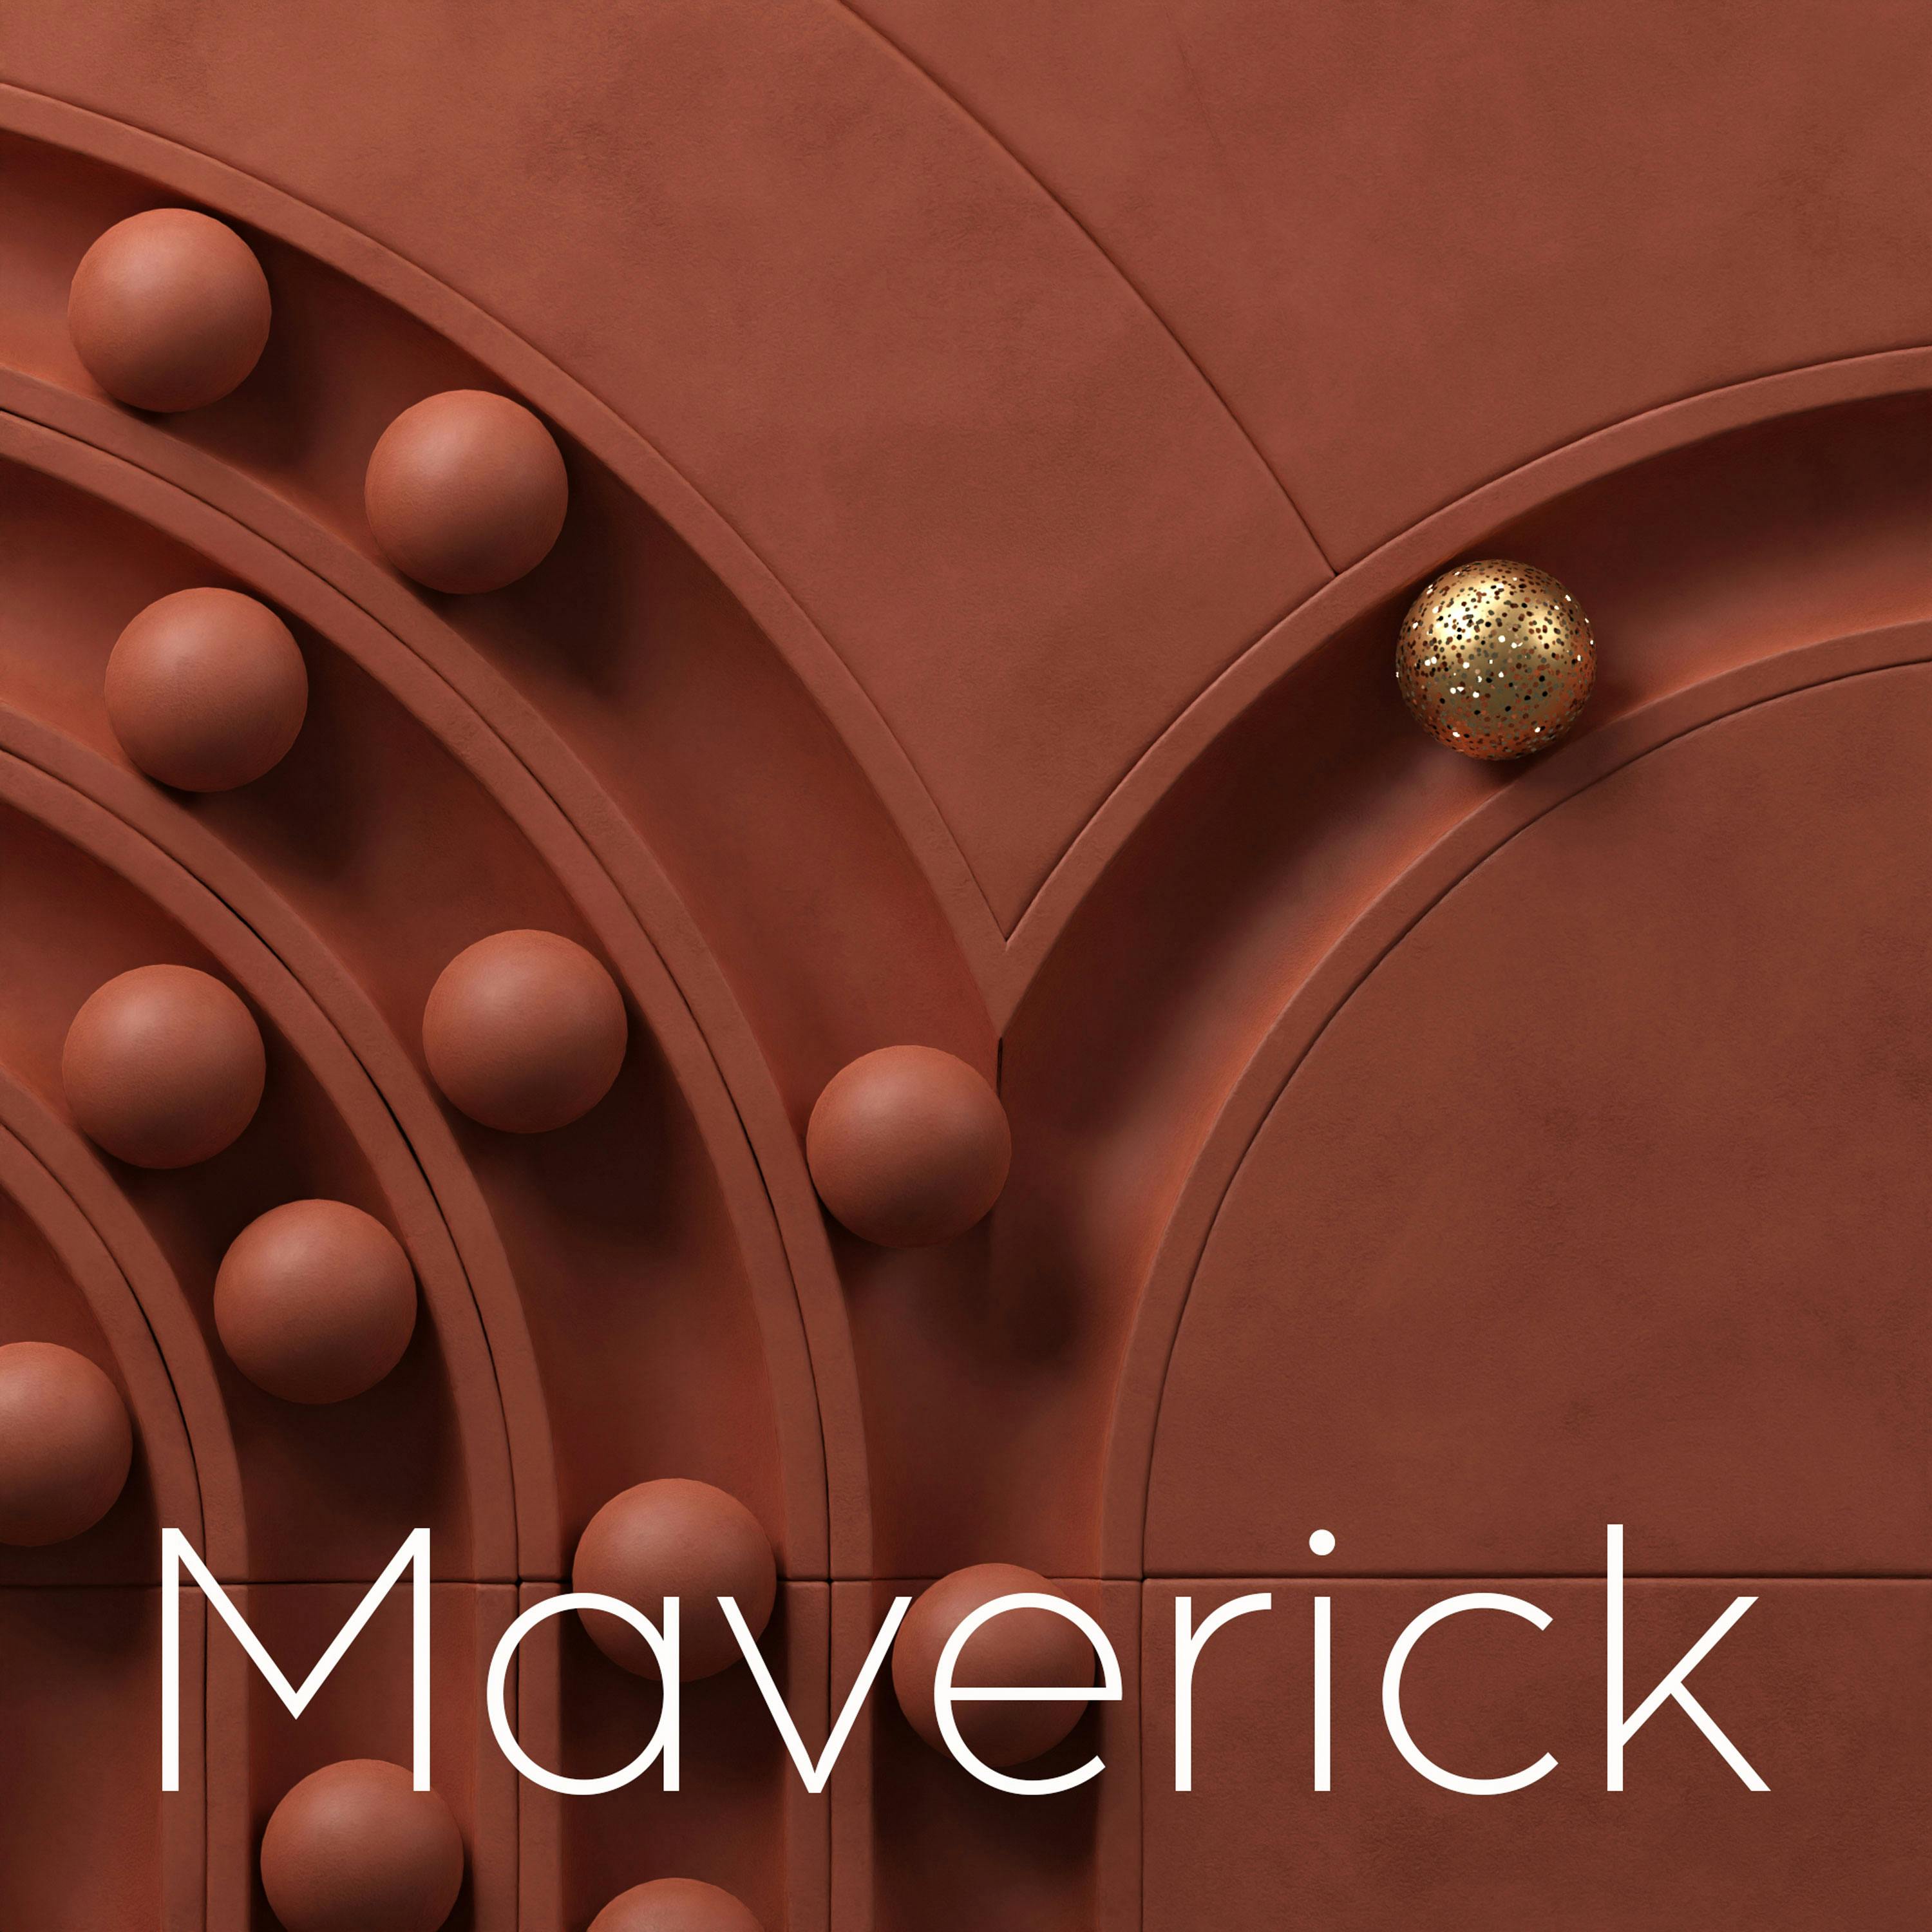 Introducing the Maverick Podcast